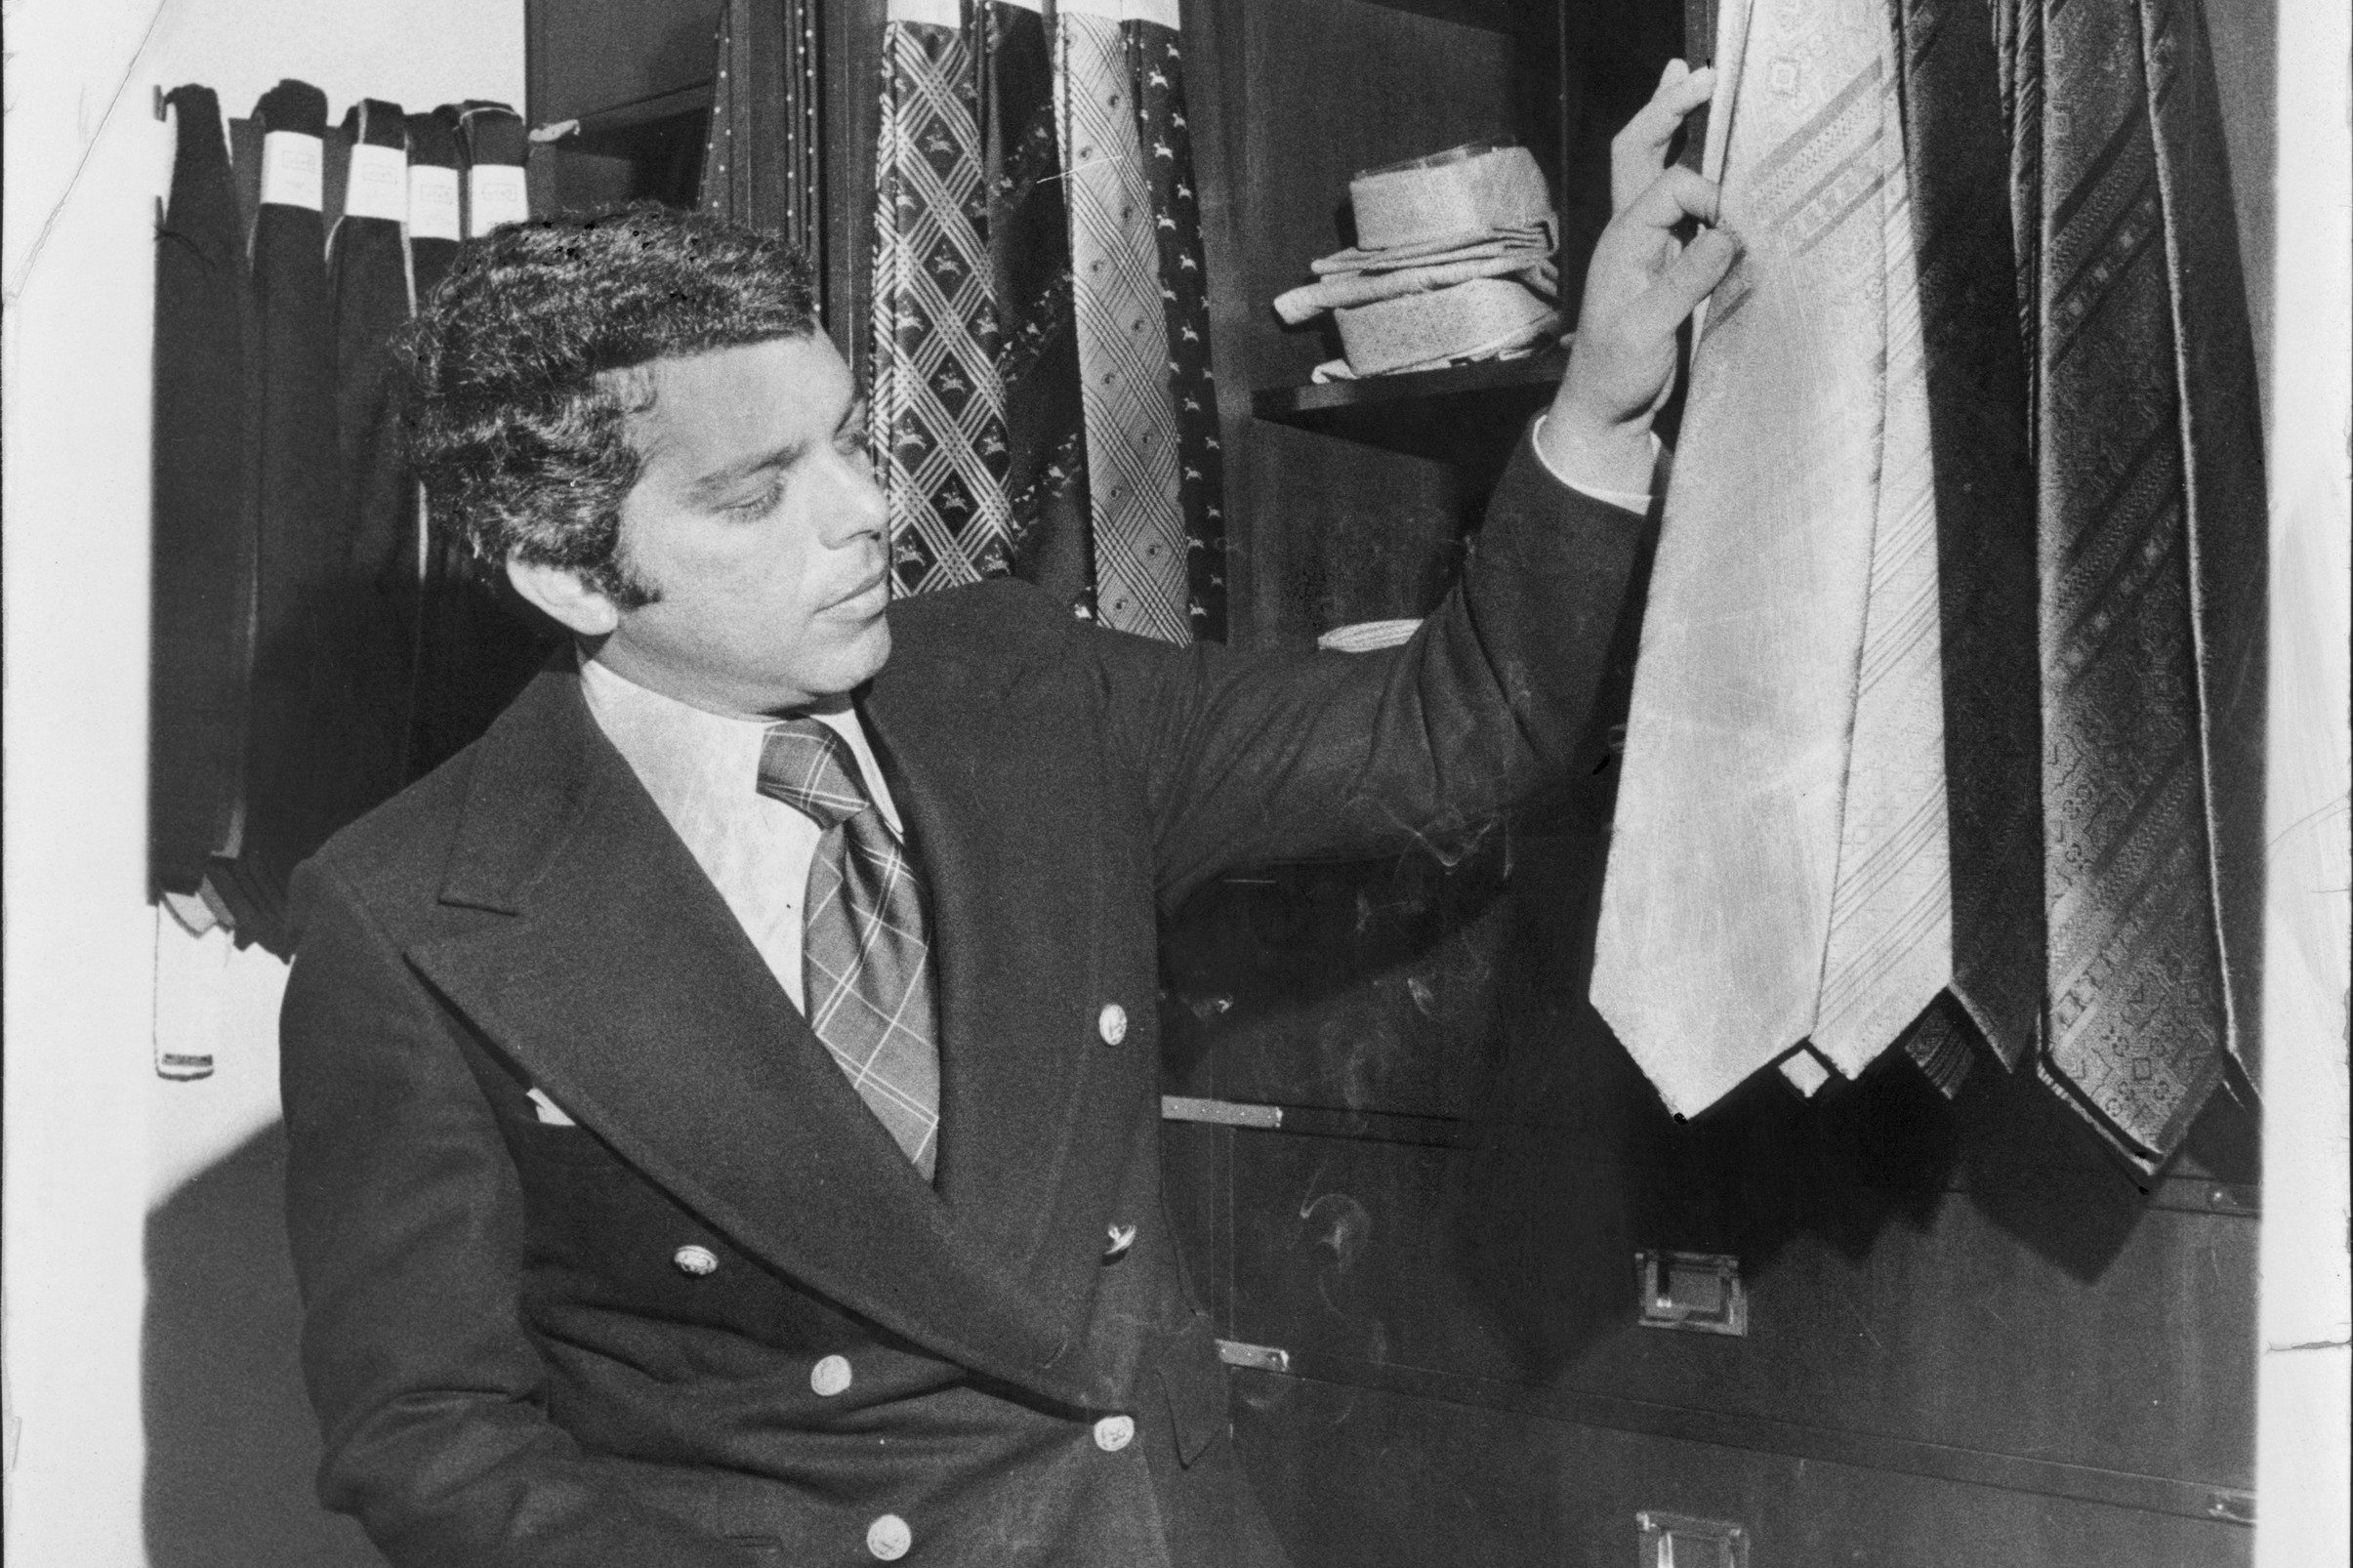 Ralph Lauren introduced his tie collection in 1970.